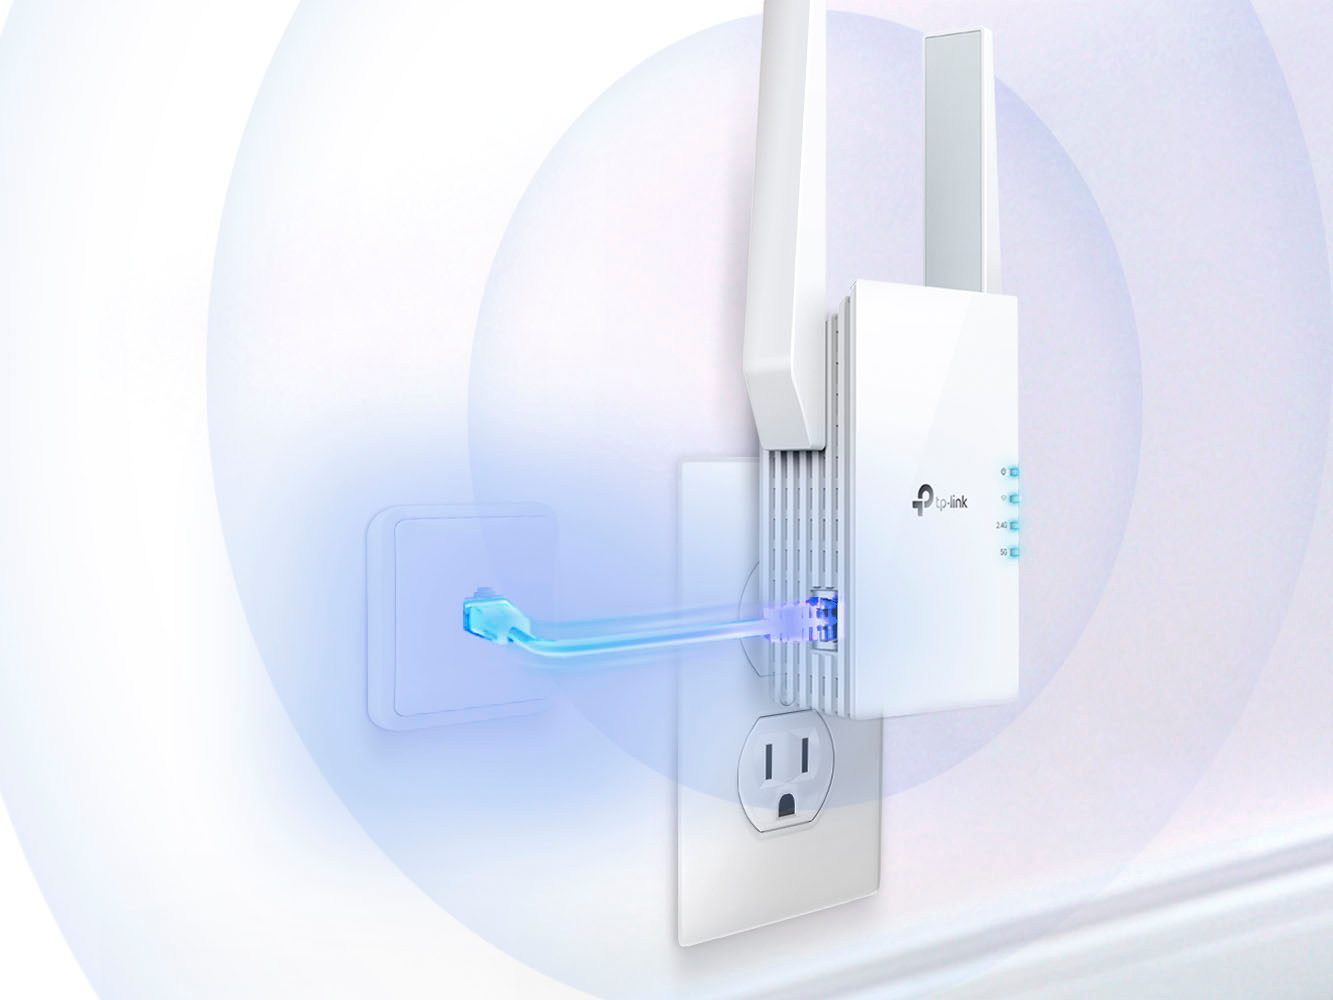 TP-Link AX3000 WiFi 6 Range Extender Internet Booster (RE705X) - Dual –